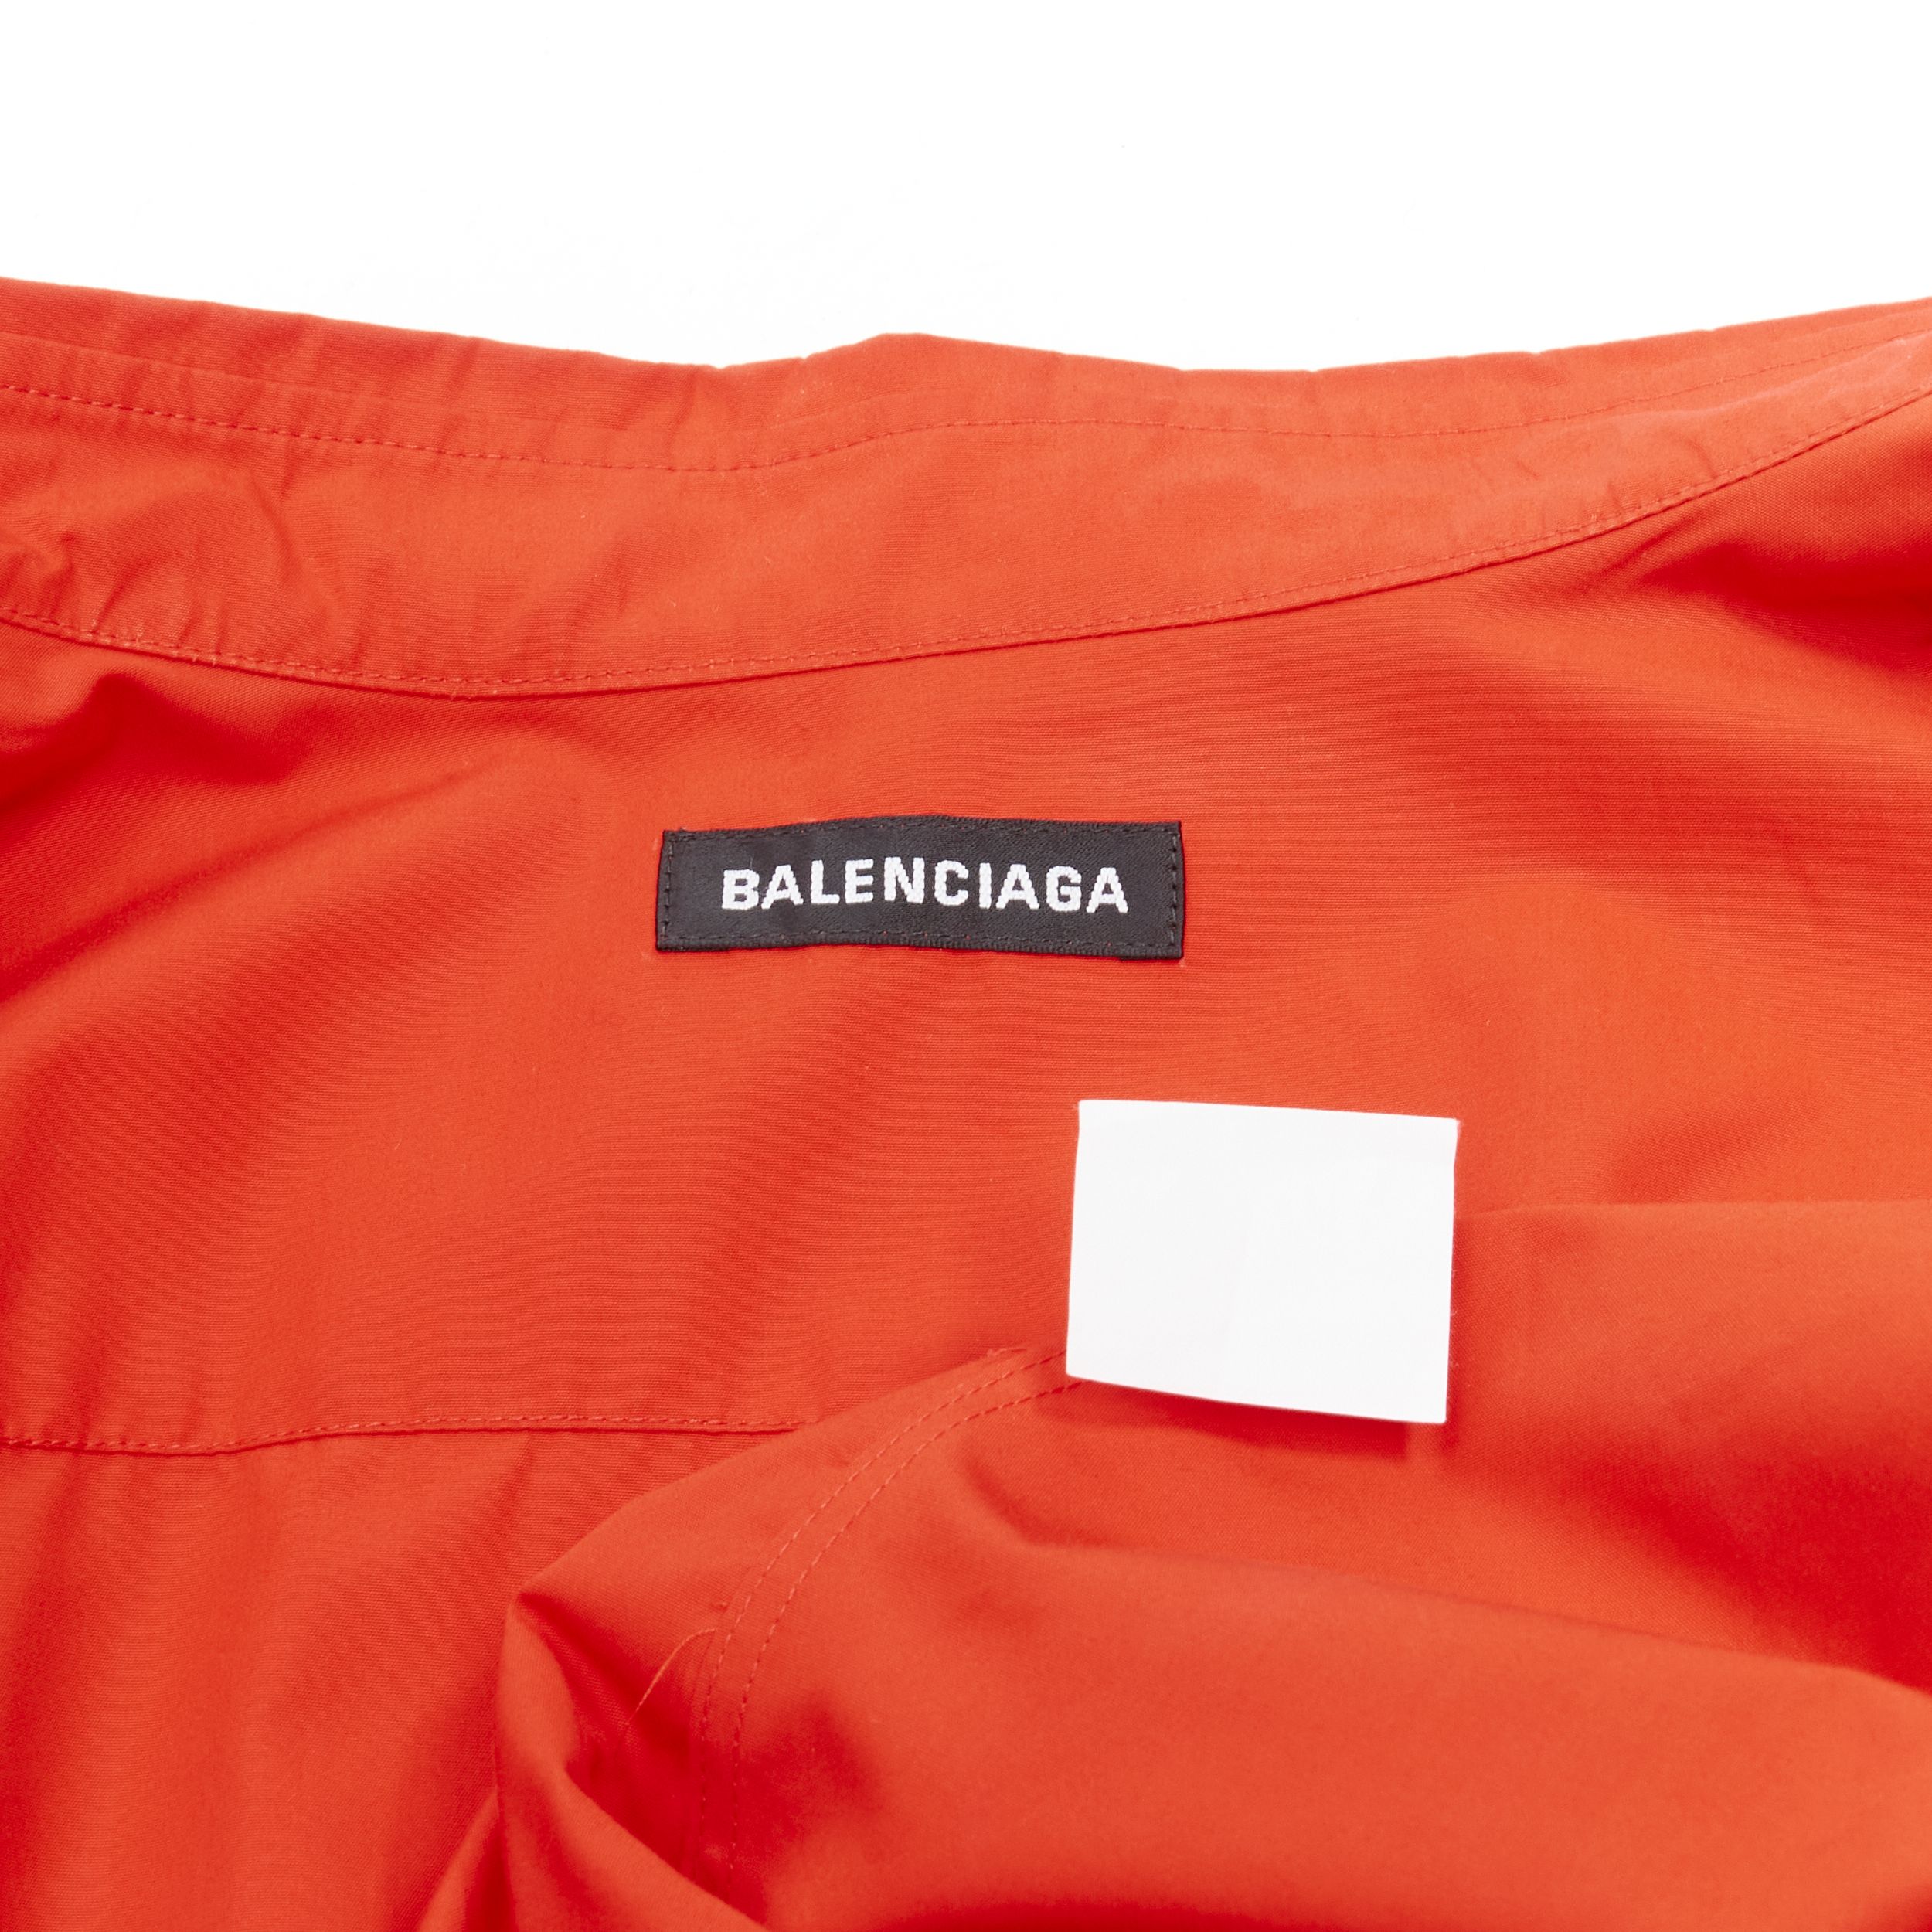 Balenciaga BALENCIAGA Cocoon red swing collar 3D cut oversized button down shirt Size M / US 6-8 / IT 42-44 - 8 Thumbnail